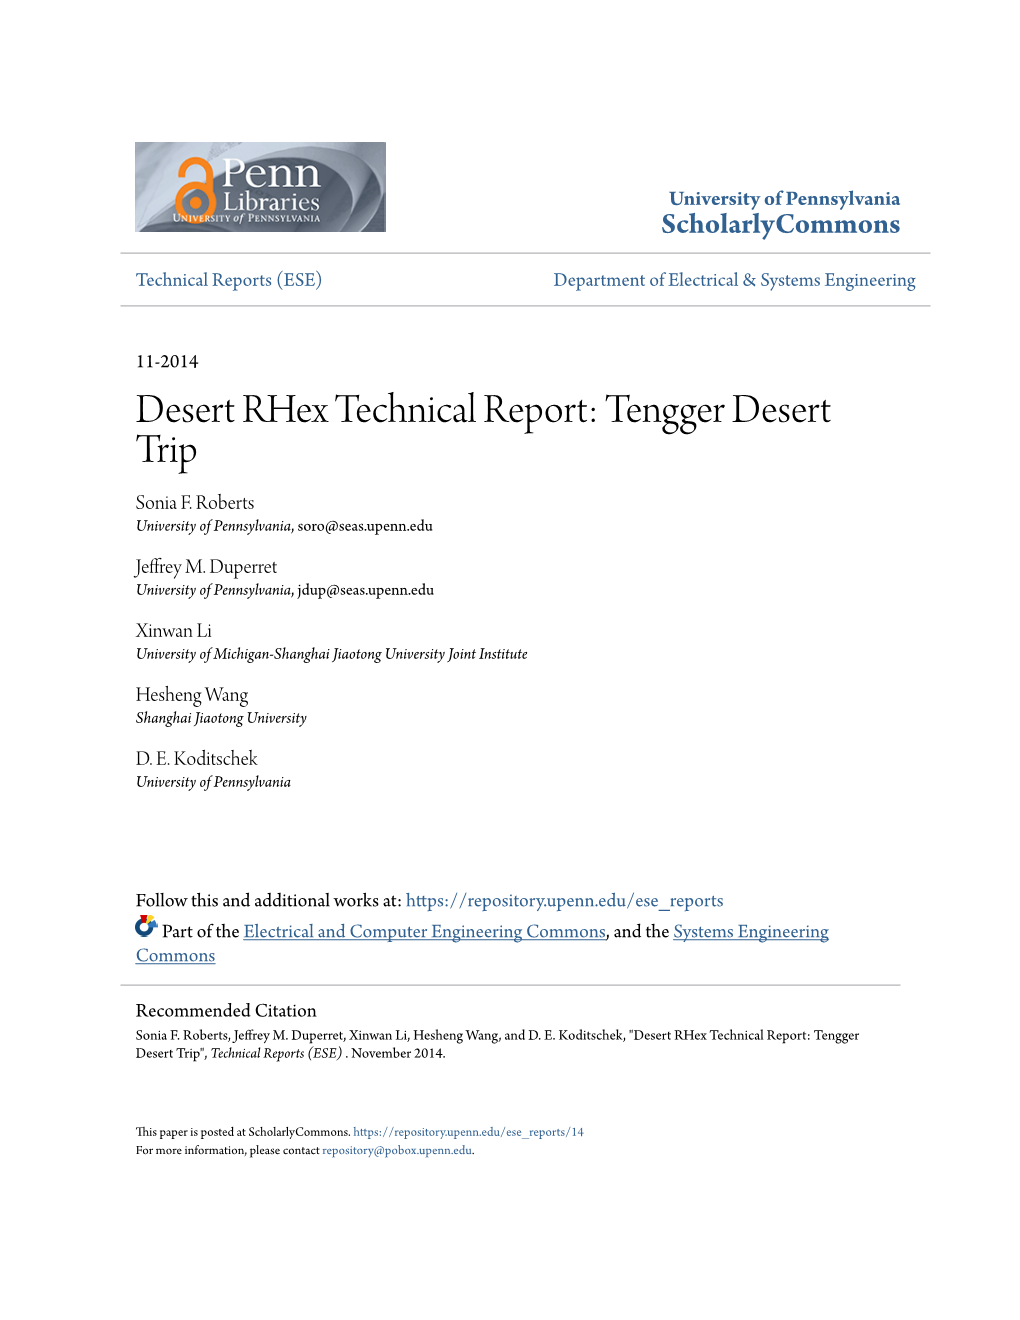 Desert Rhex Technical Report: Tengger Desert Trip Sonia F